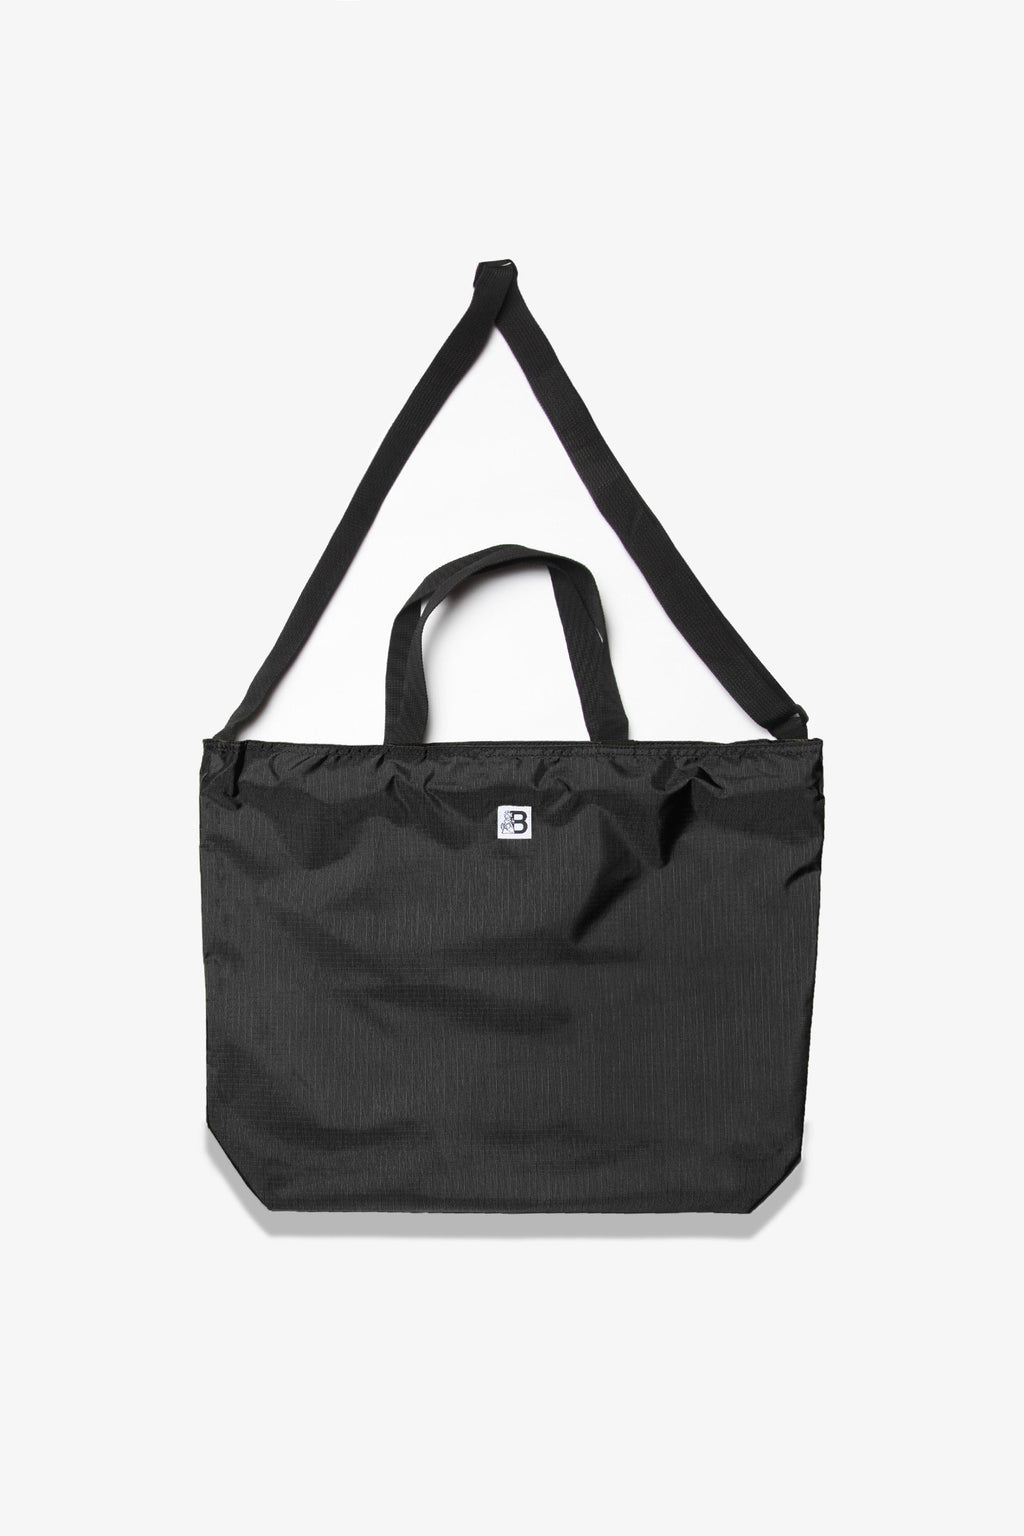 Blacksmith - Ripstop Tote Bag - Black | Blacksmith Store